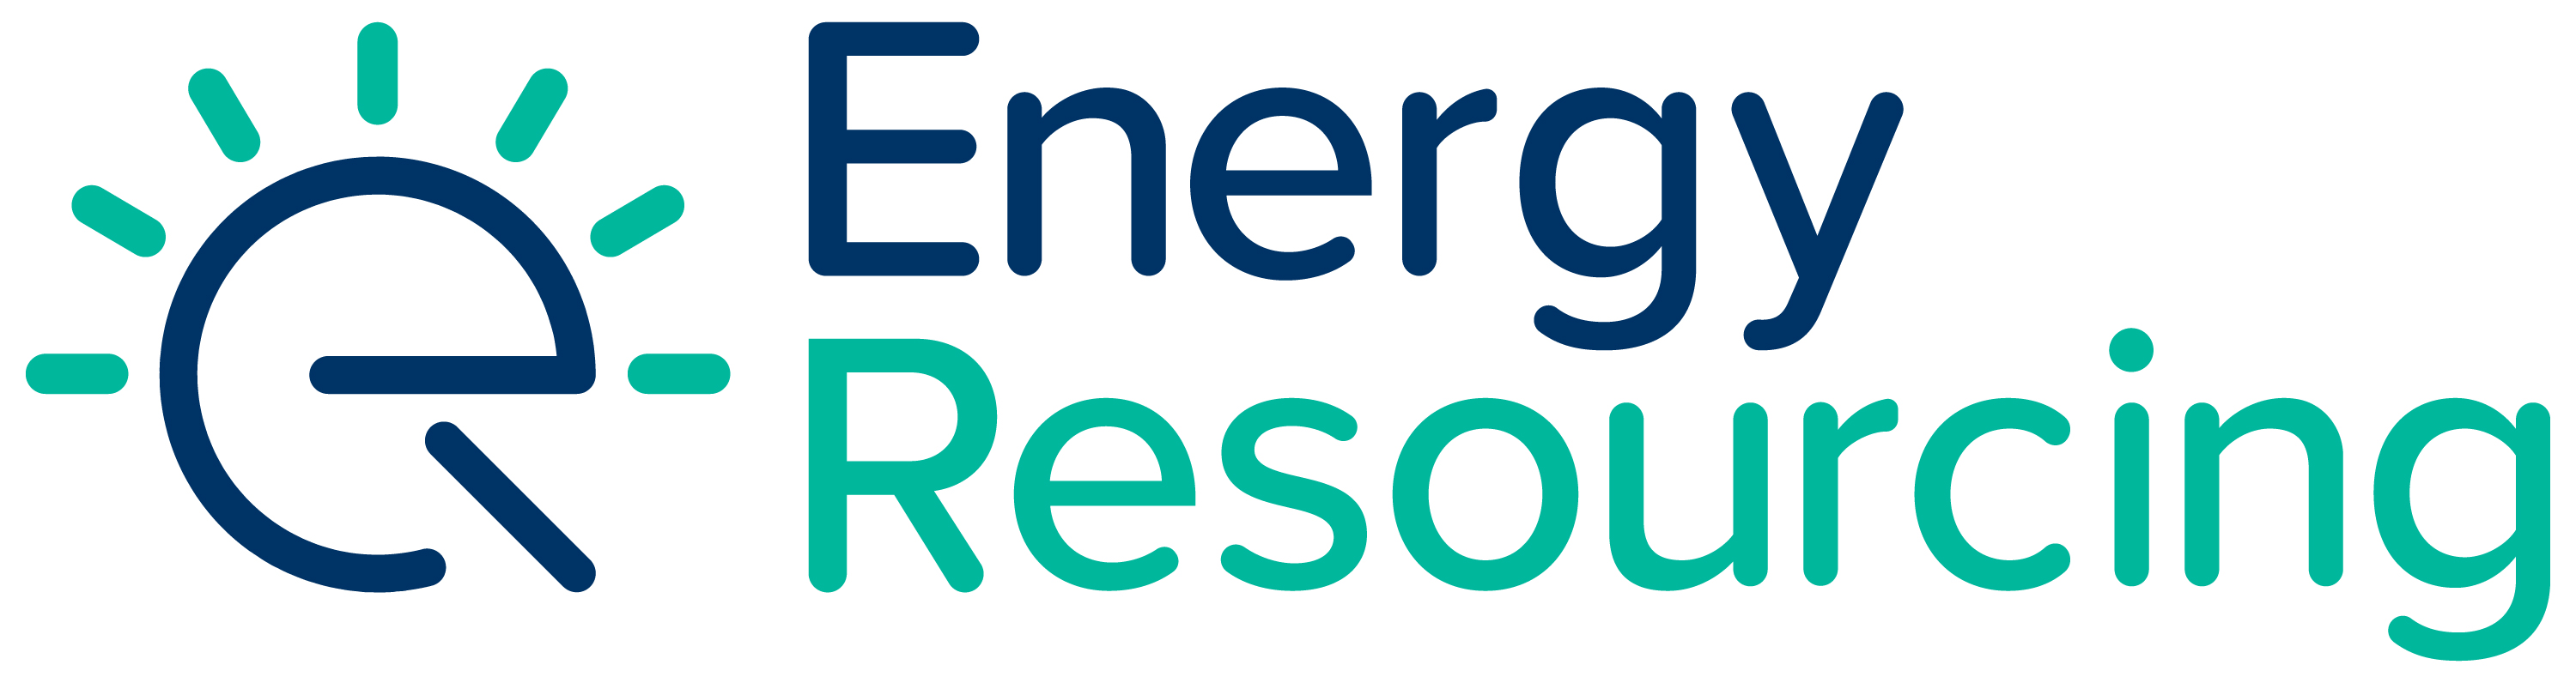 Energy Resourcing logo